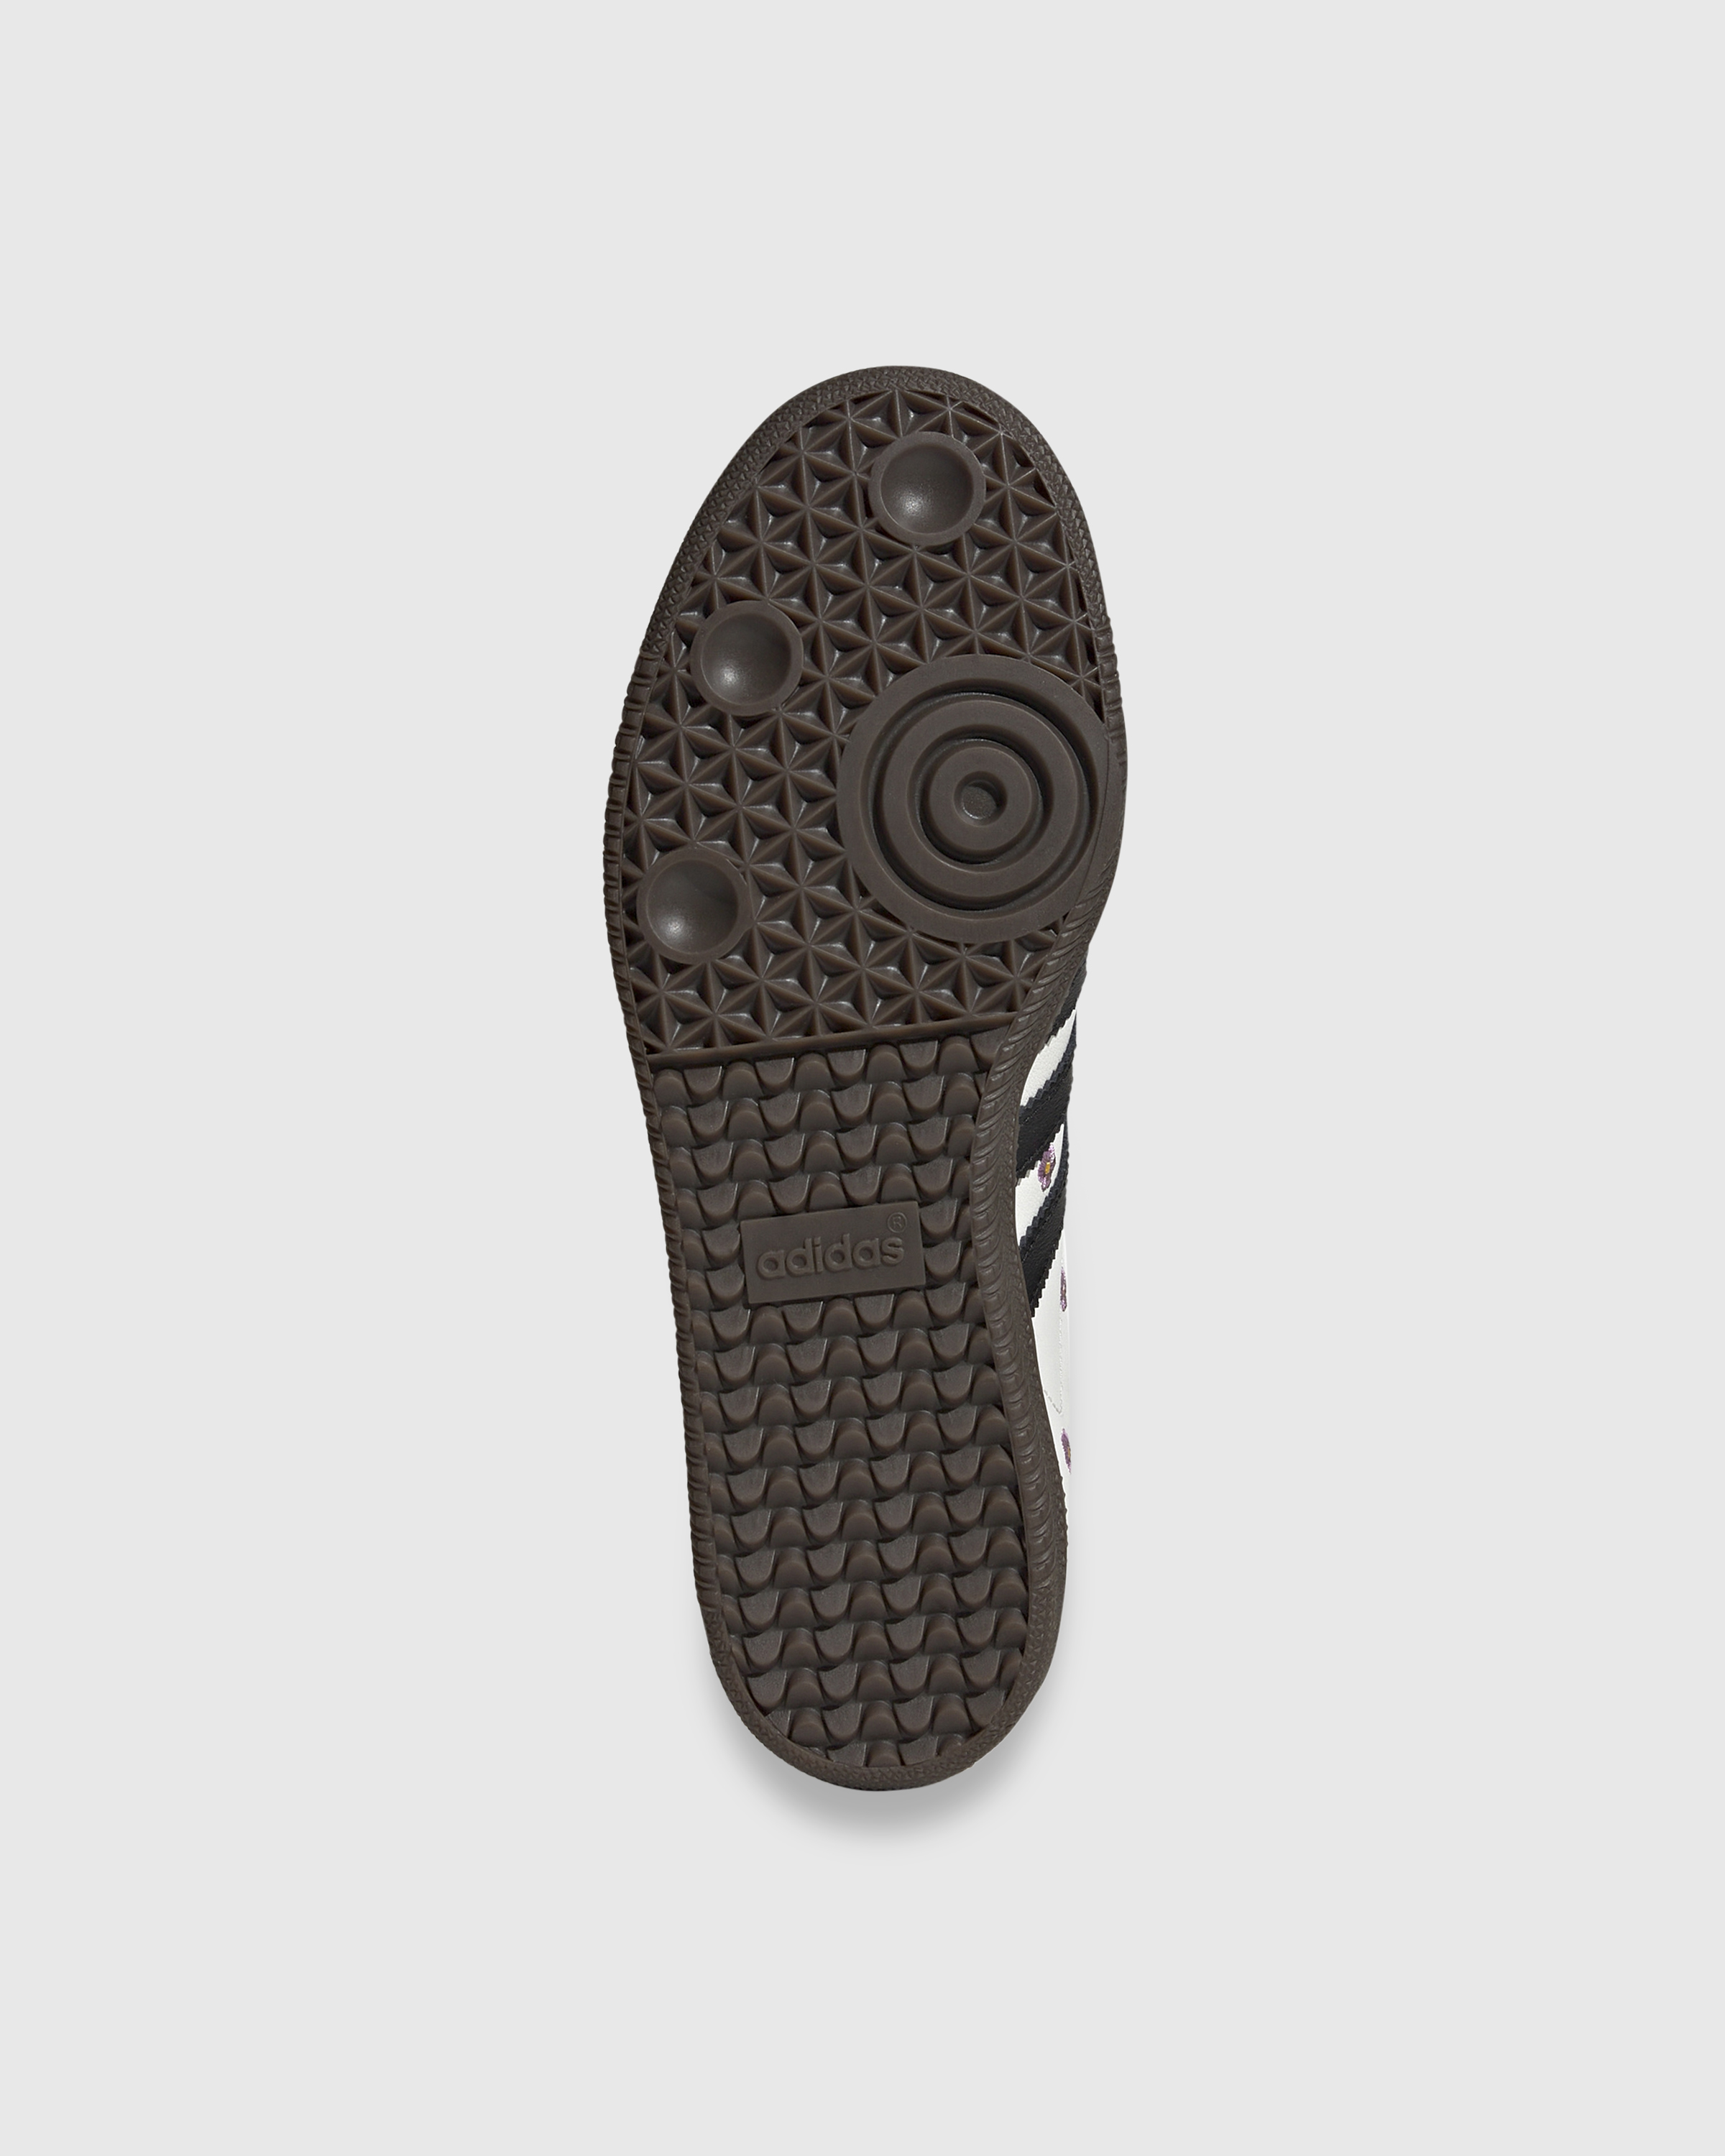 Adidas – Samba OG W White/Black/Gum - Low Top Sneakers - White - Image 6